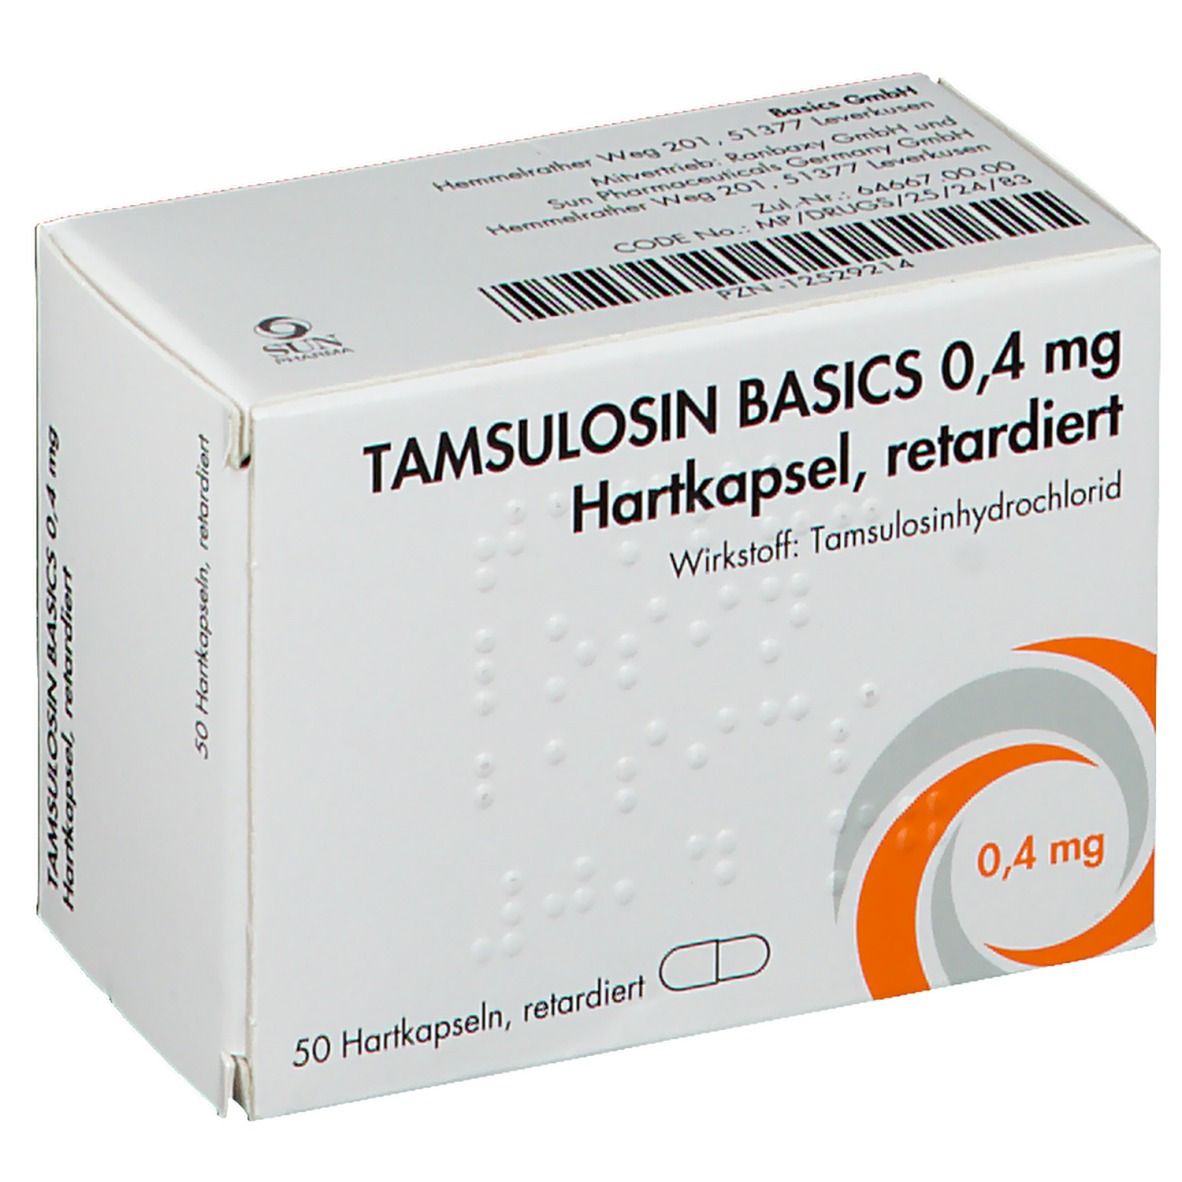 TAMSULOSIN BASICS 0,4 mg